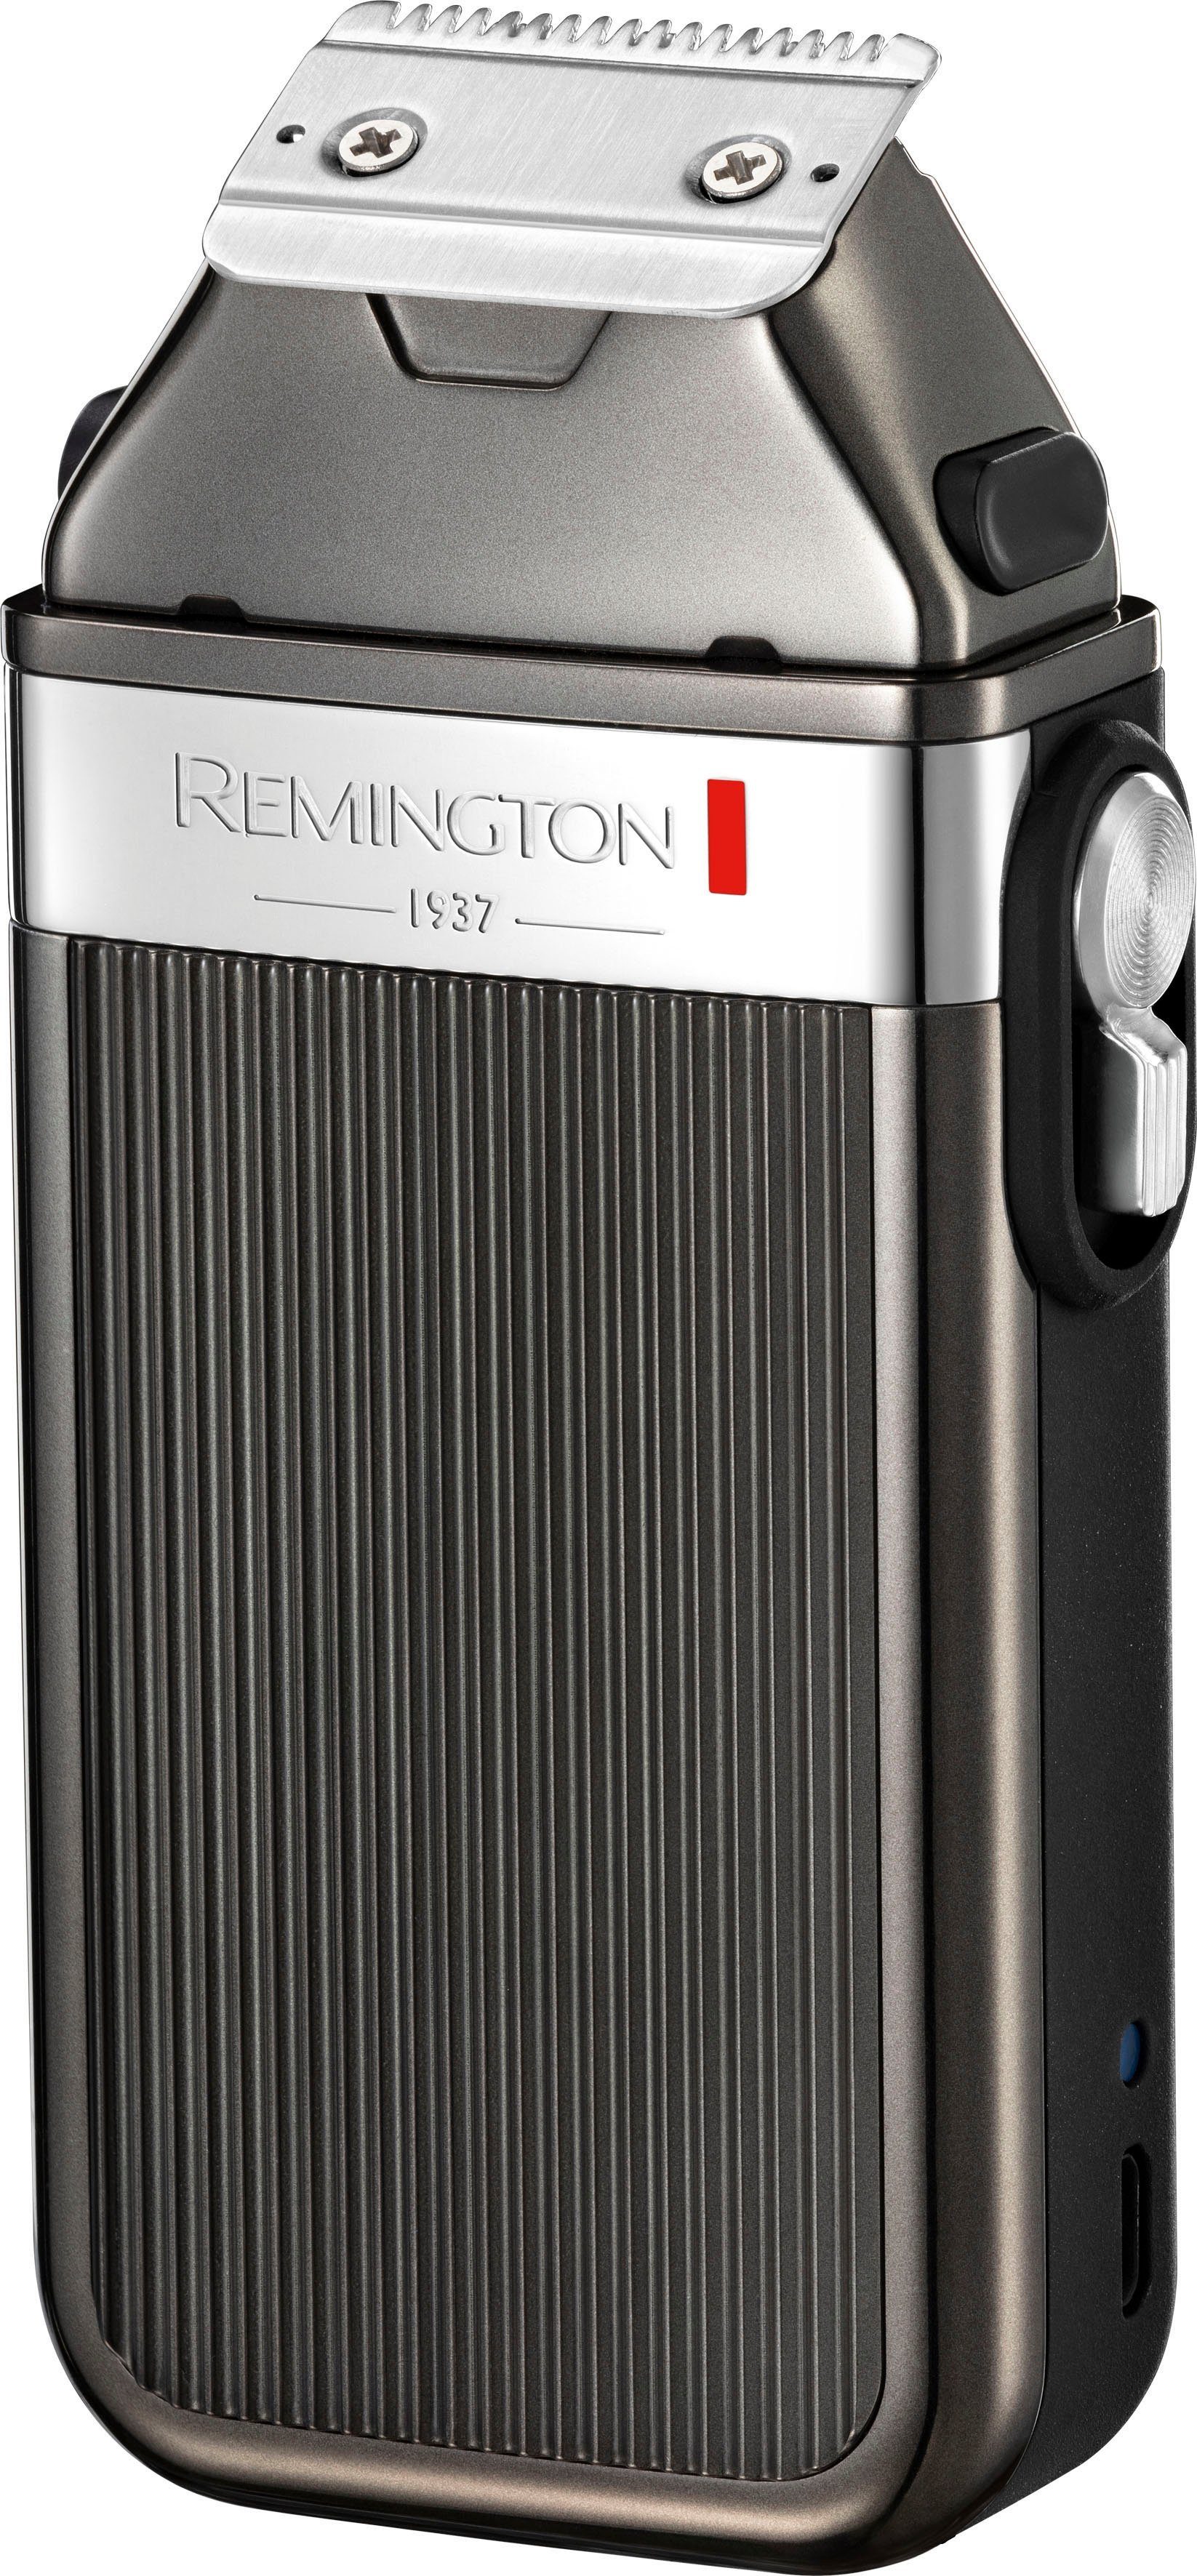 Bartschneider Remington Design Heritage im Retro MB9100, Premium